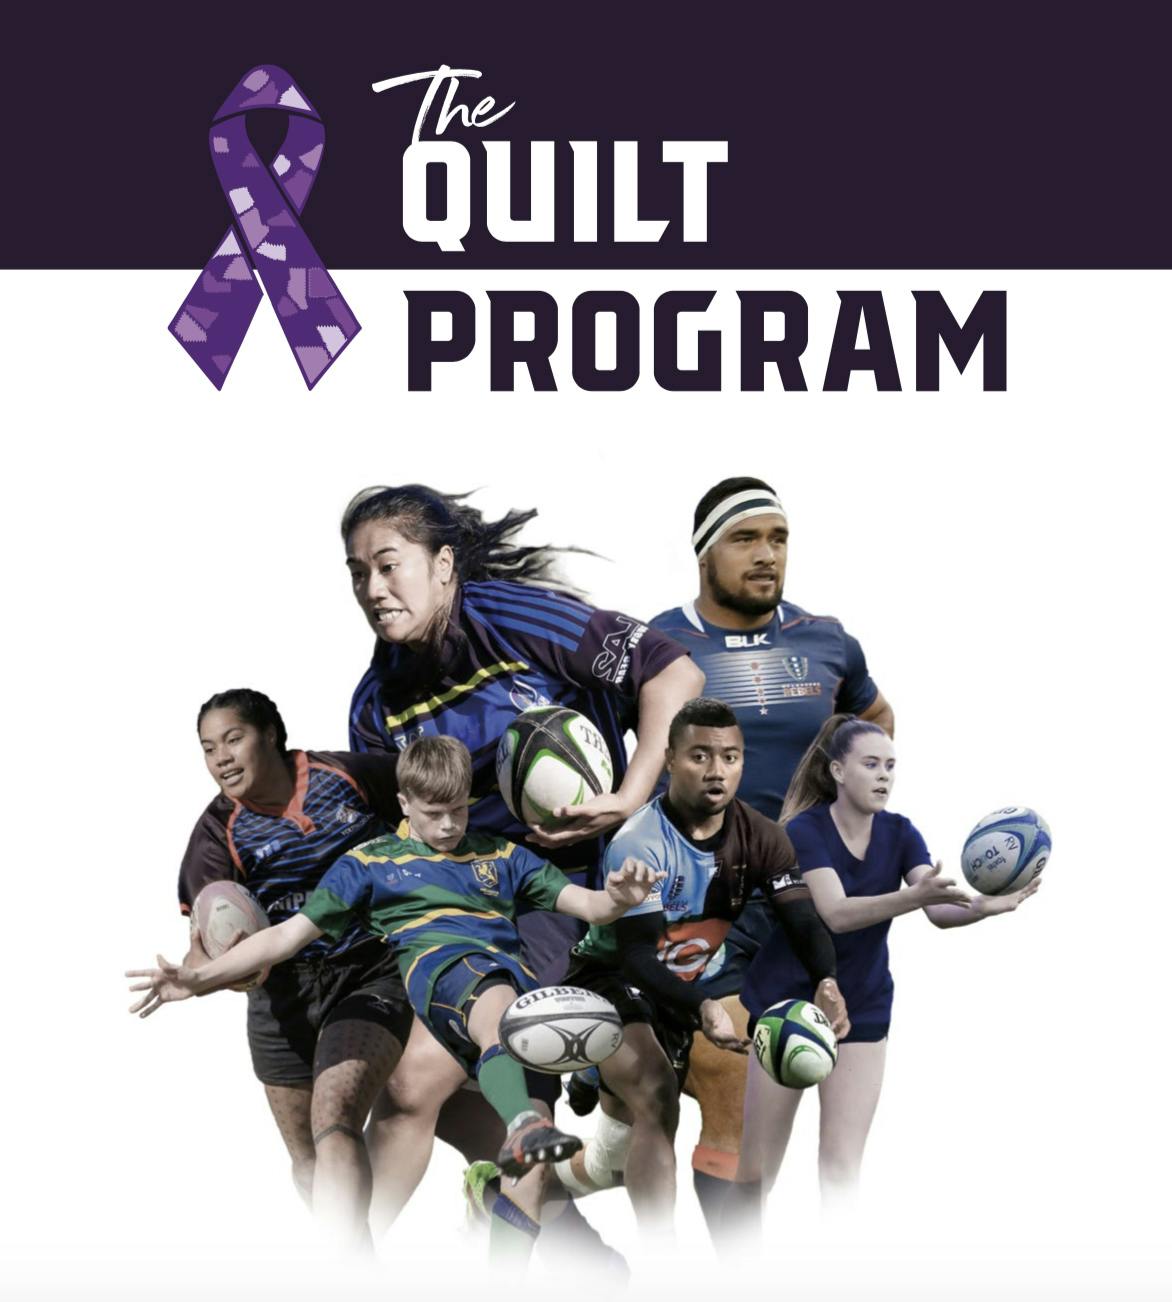 Quilt Program Flyer